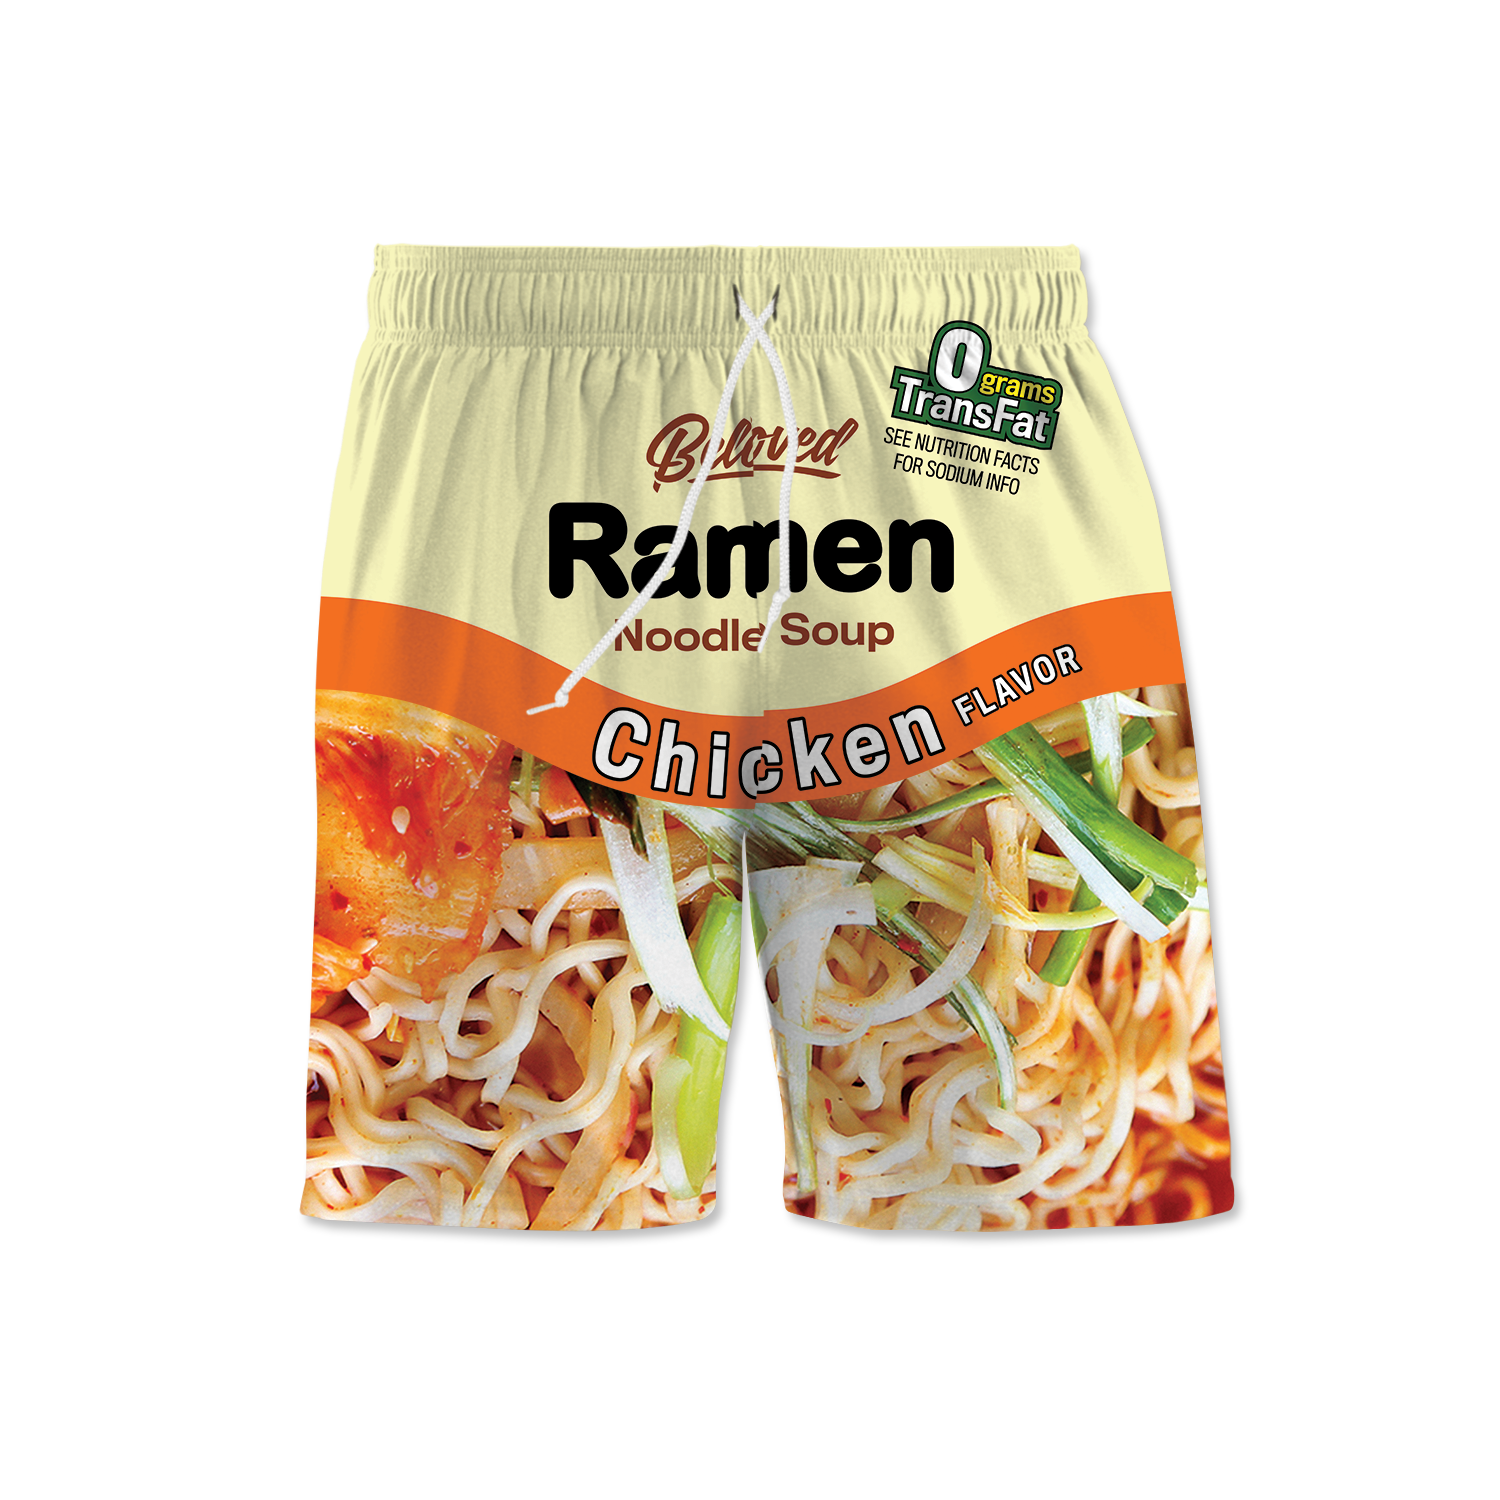 Odd Sox Men's Funny Underwear Boxer Briefs, Top Ramen Noodle Soup